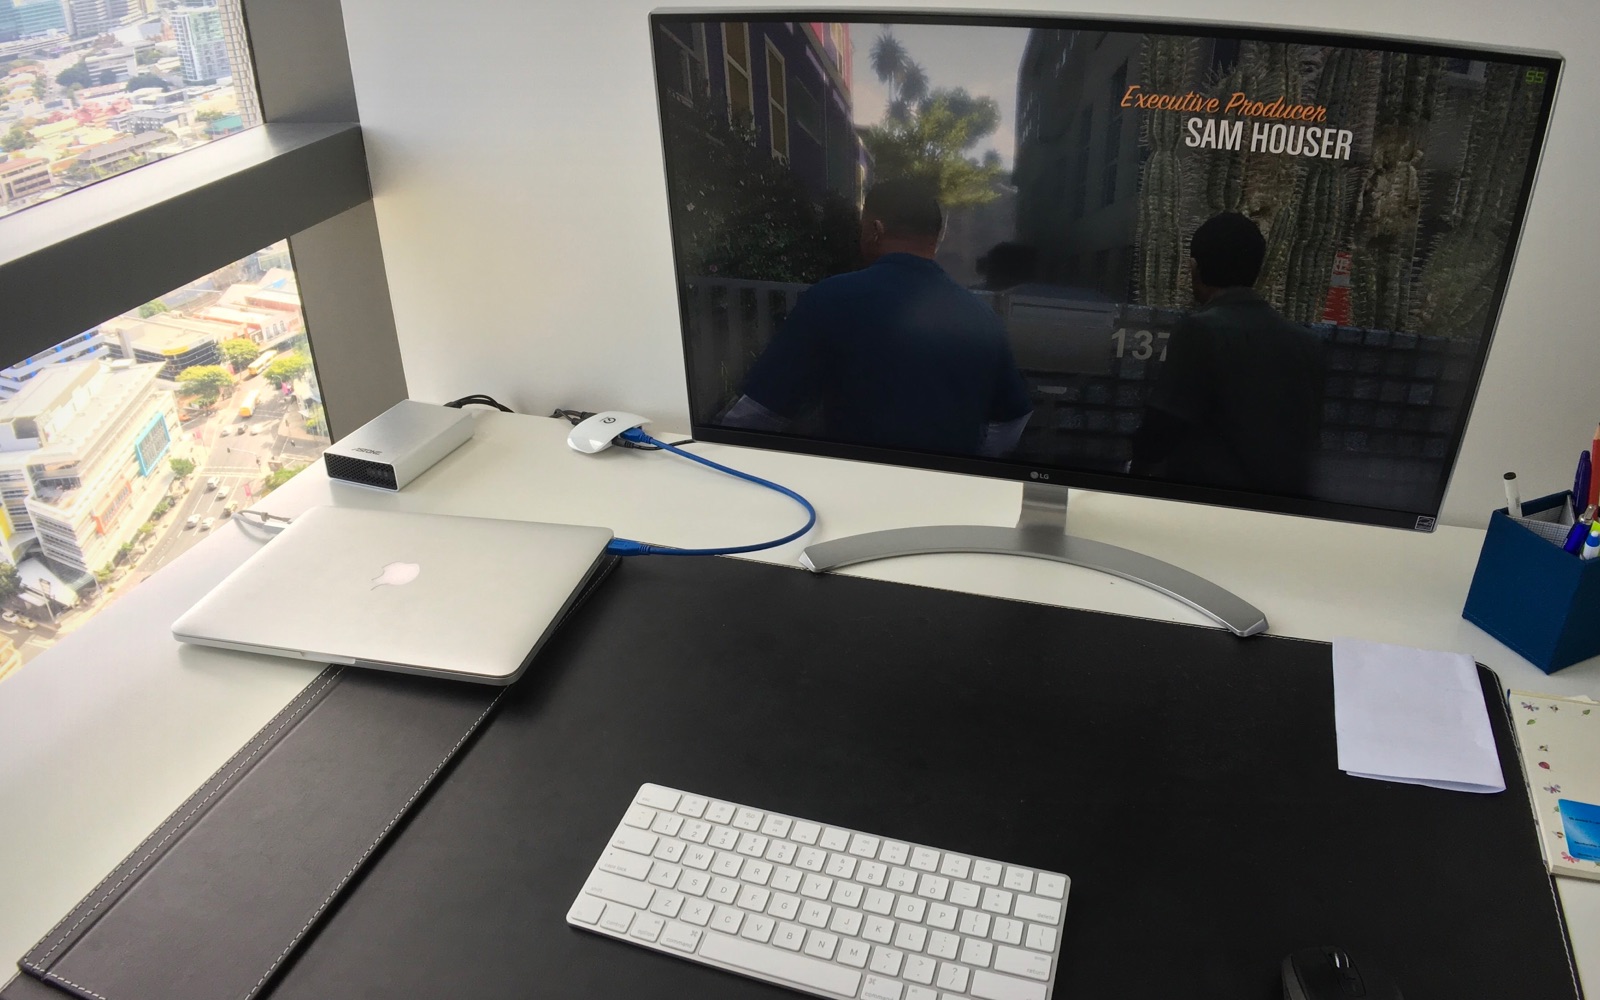 Grand Theft Auto 5 running on the 2013 Macbook Pro